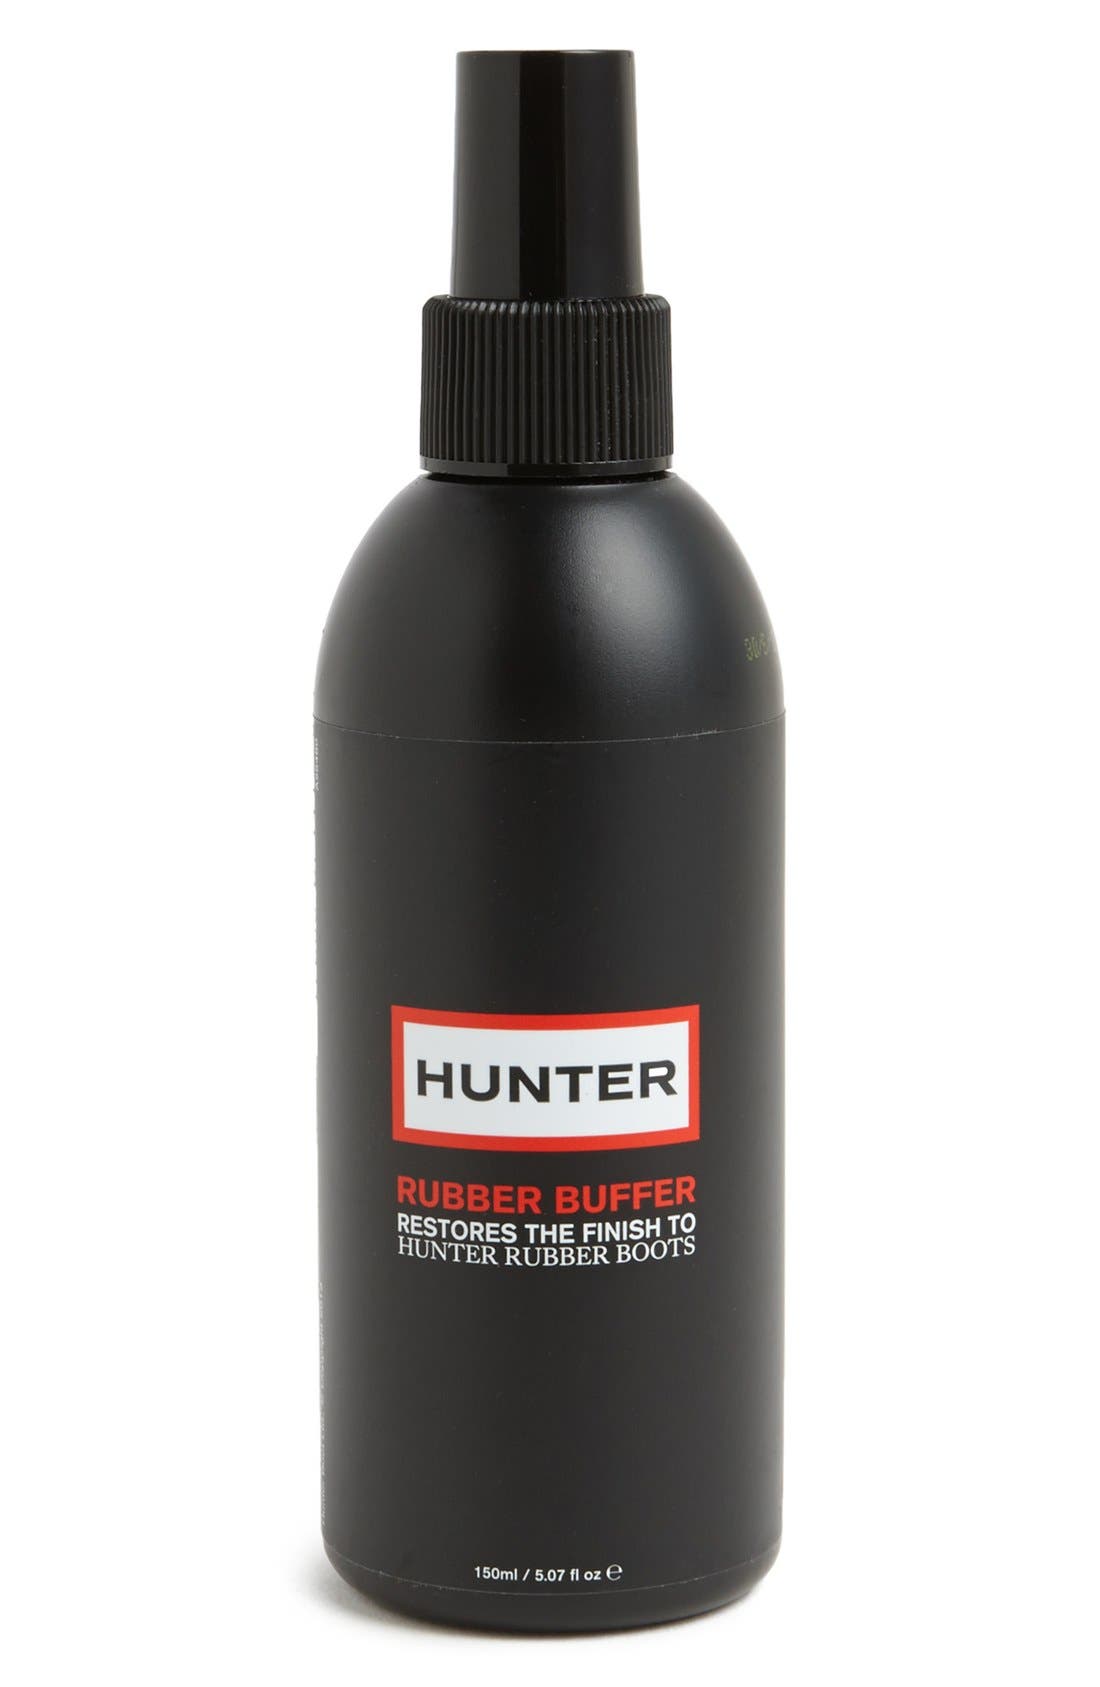 hunter boot buffer spray